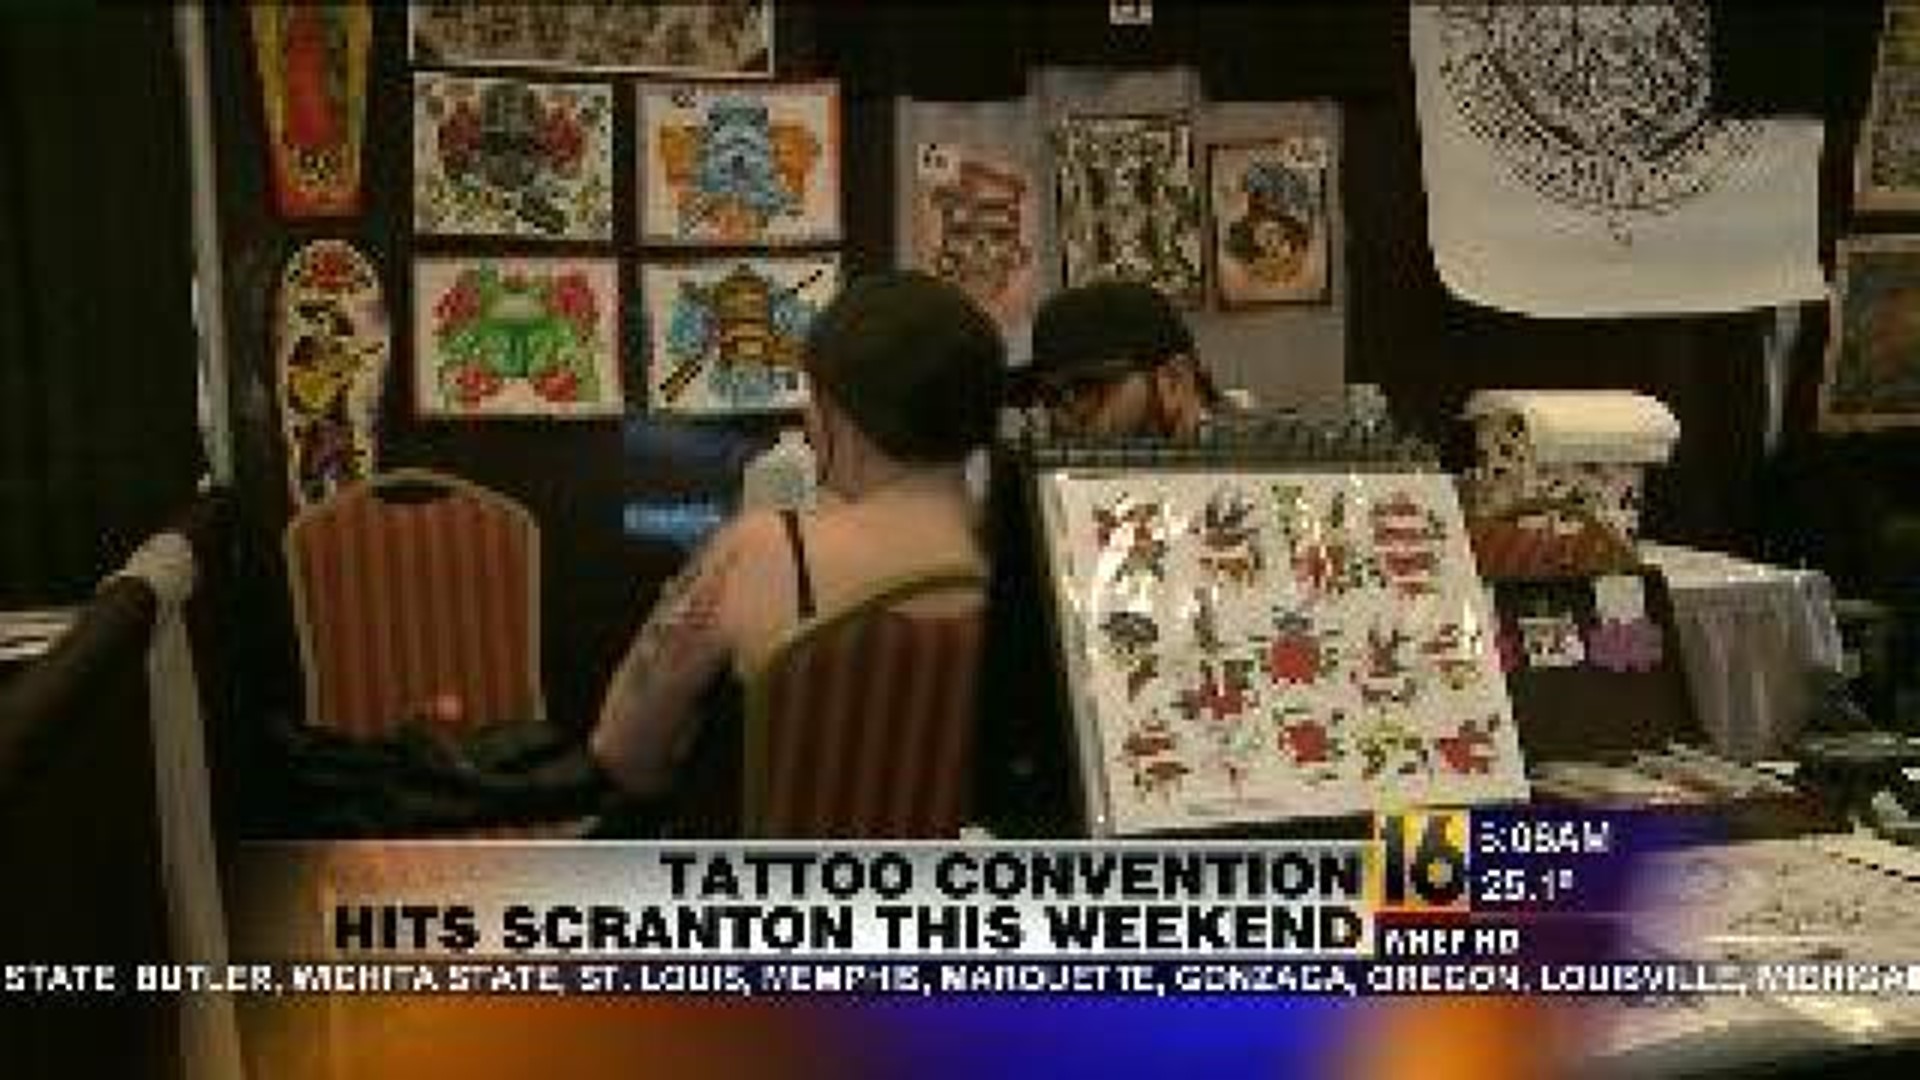 2013 Tattoo Convention at the Scranton Hilton